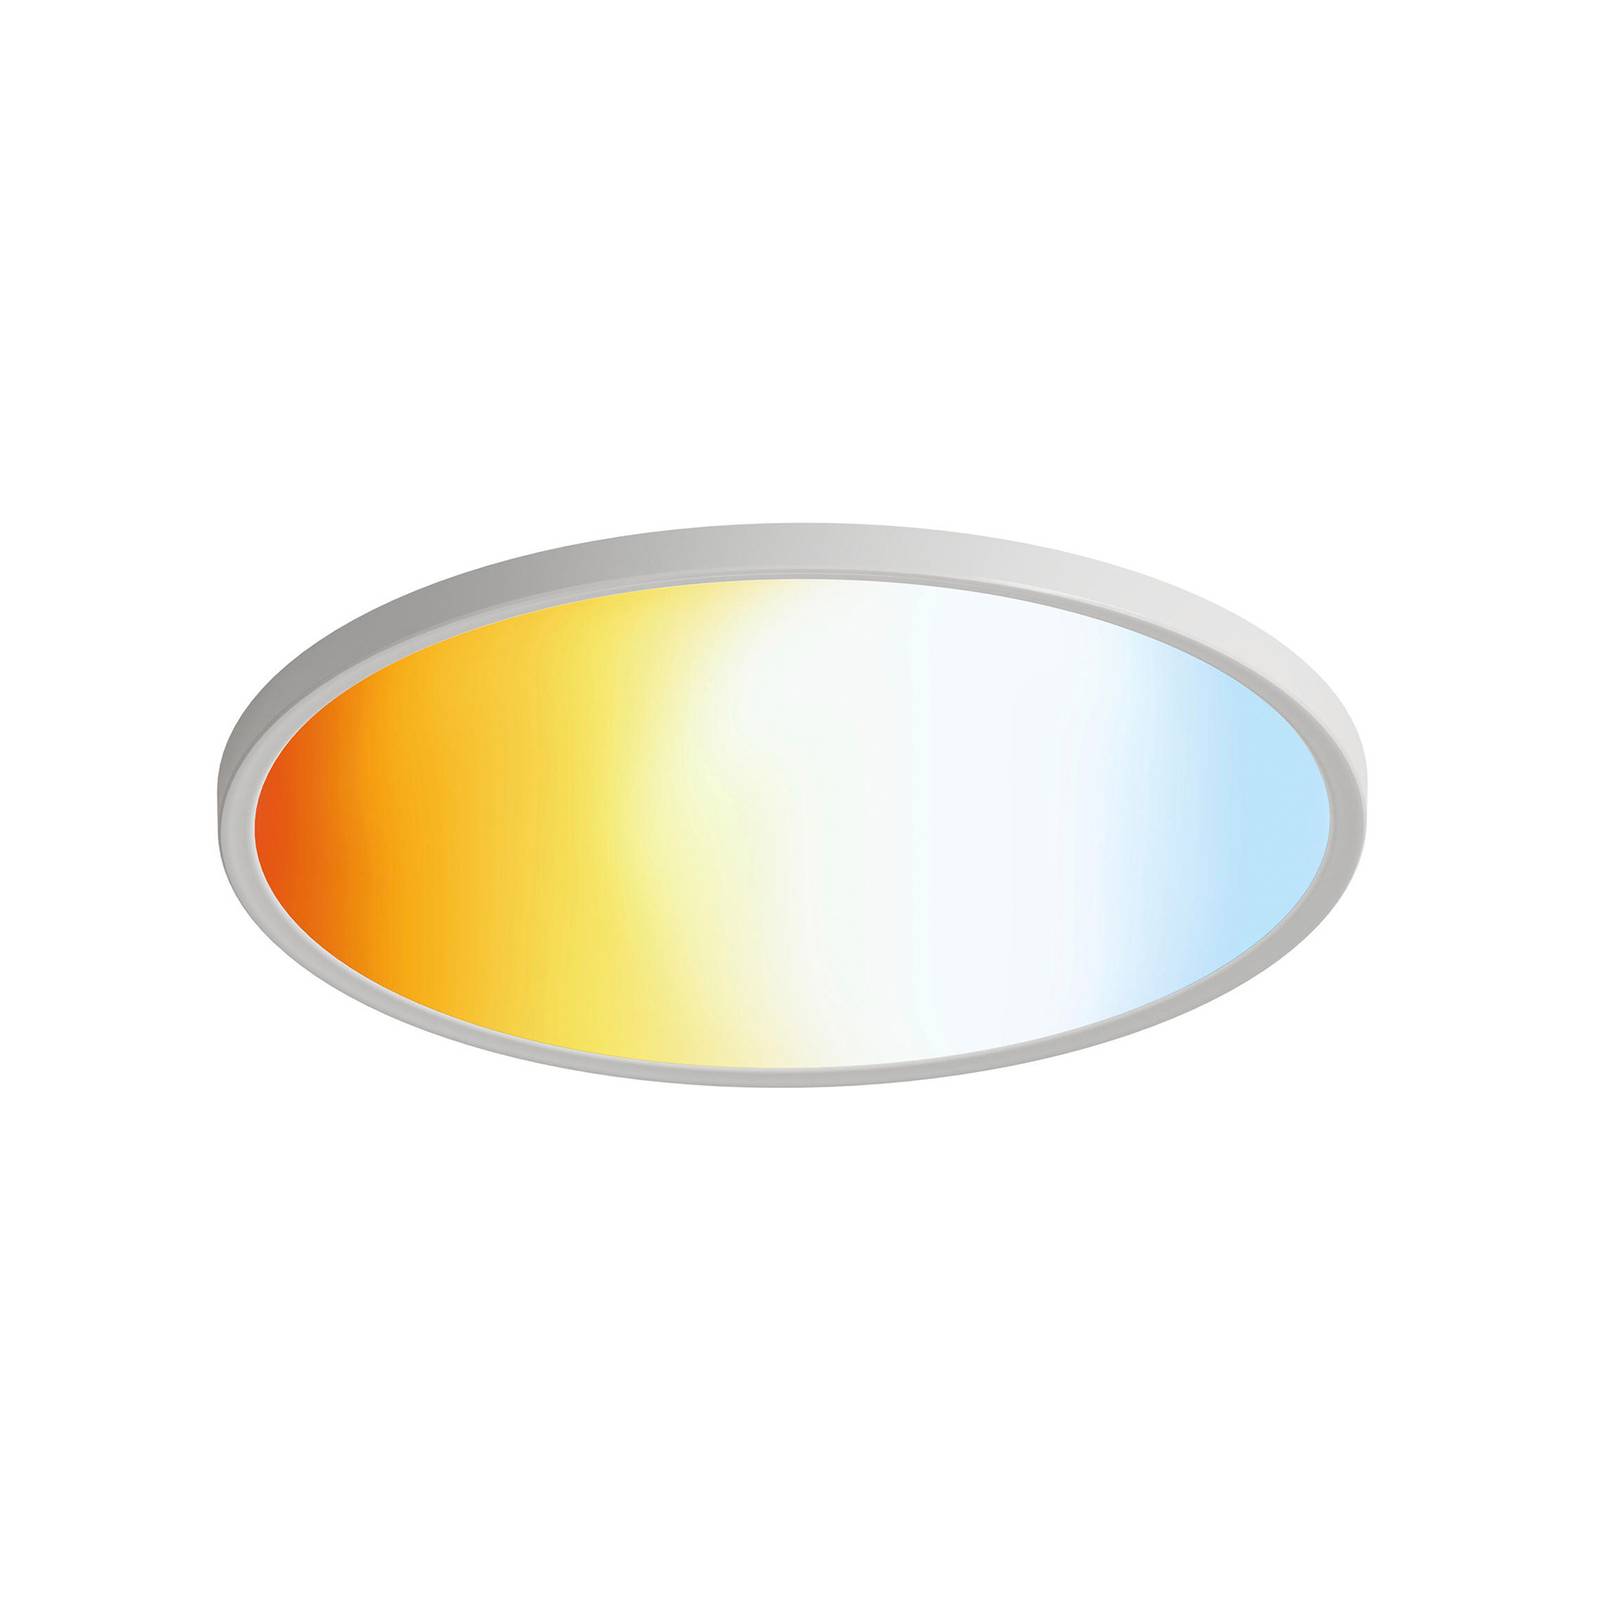 Müller Licht tint Smart LED-Deckenleuchte Amela, Ø 30 cm